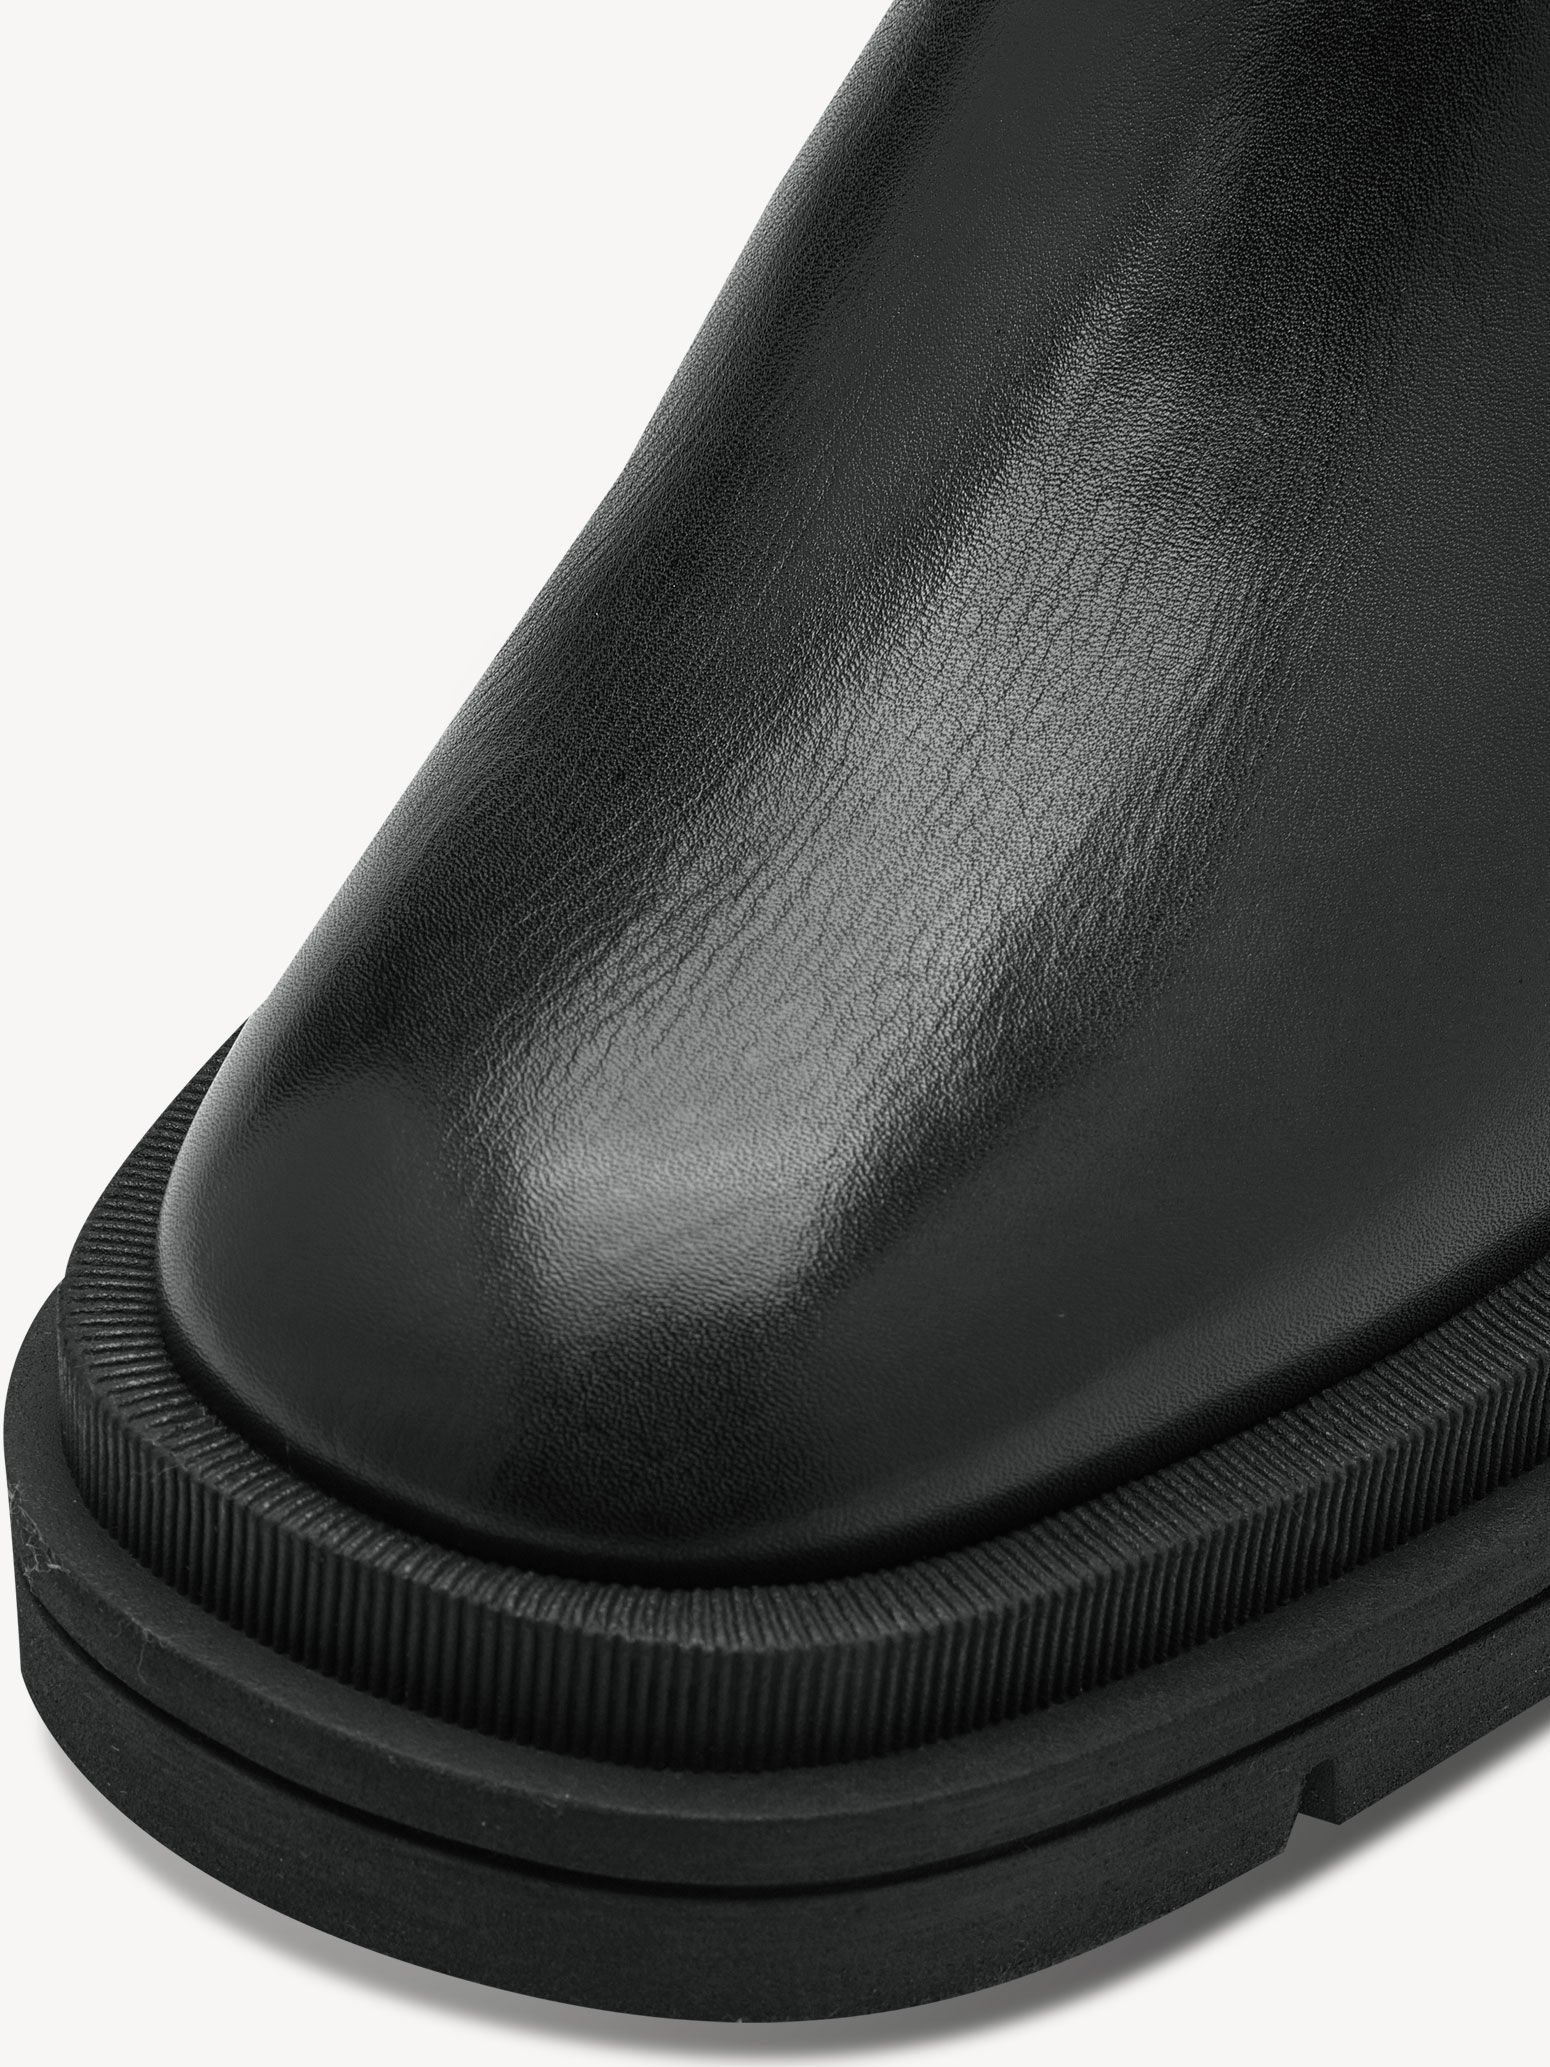 Leather Bootie - black warm lining, BLACK, hi-res